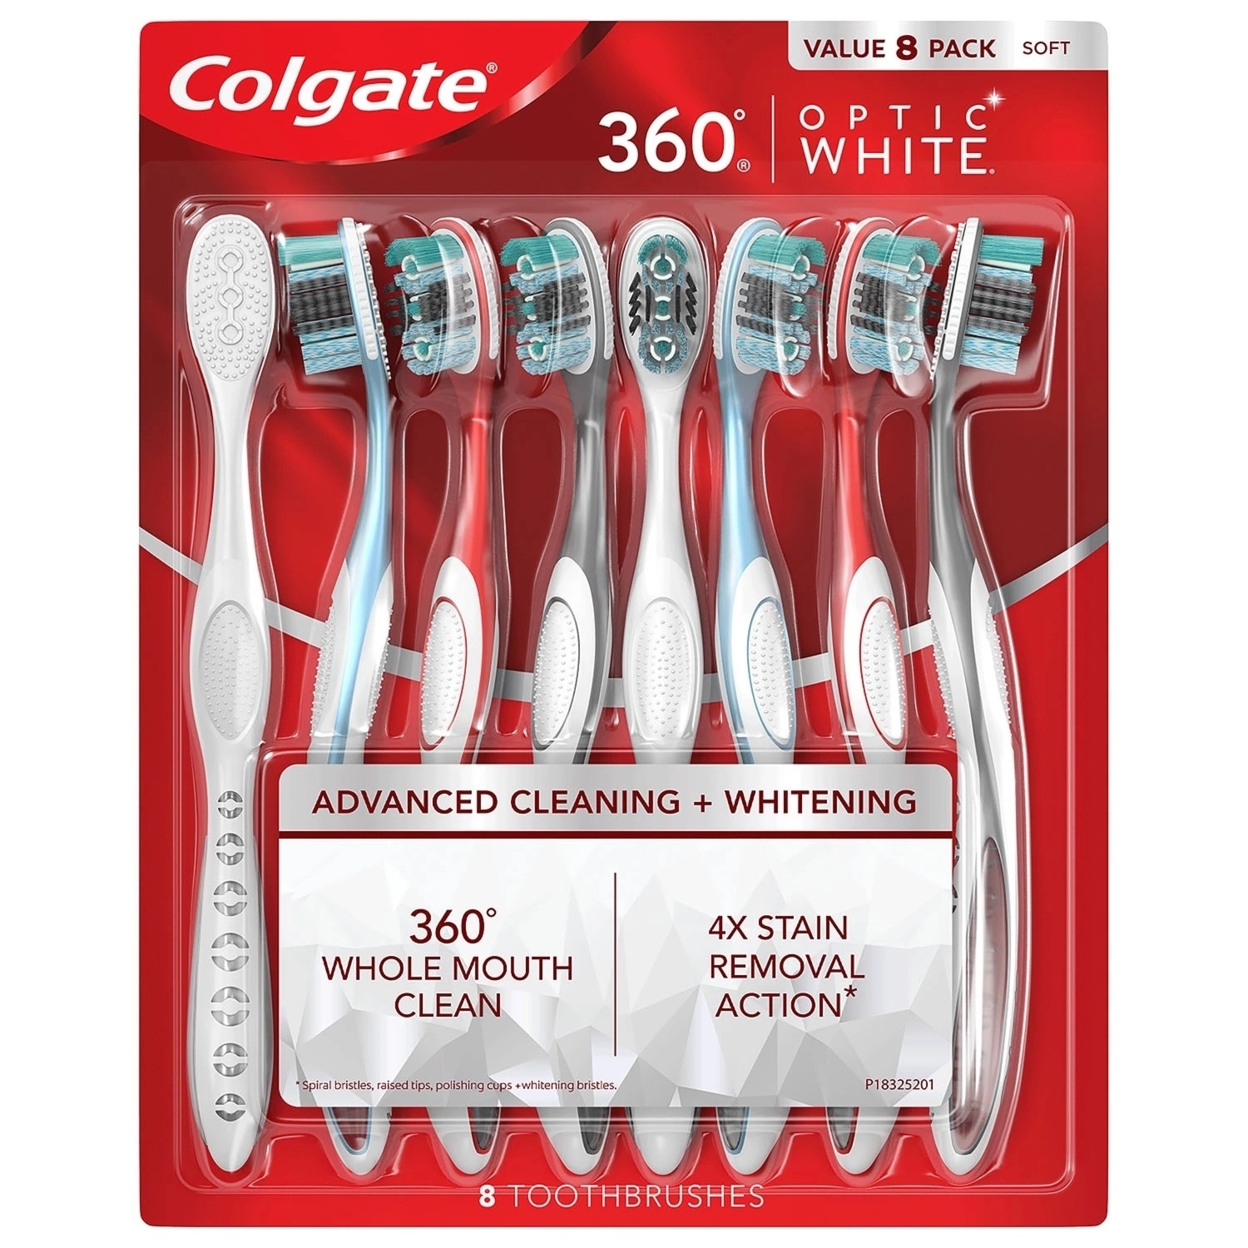 Colgate Optic White 360 Manual Toothbrush, Soft (8 Pack)